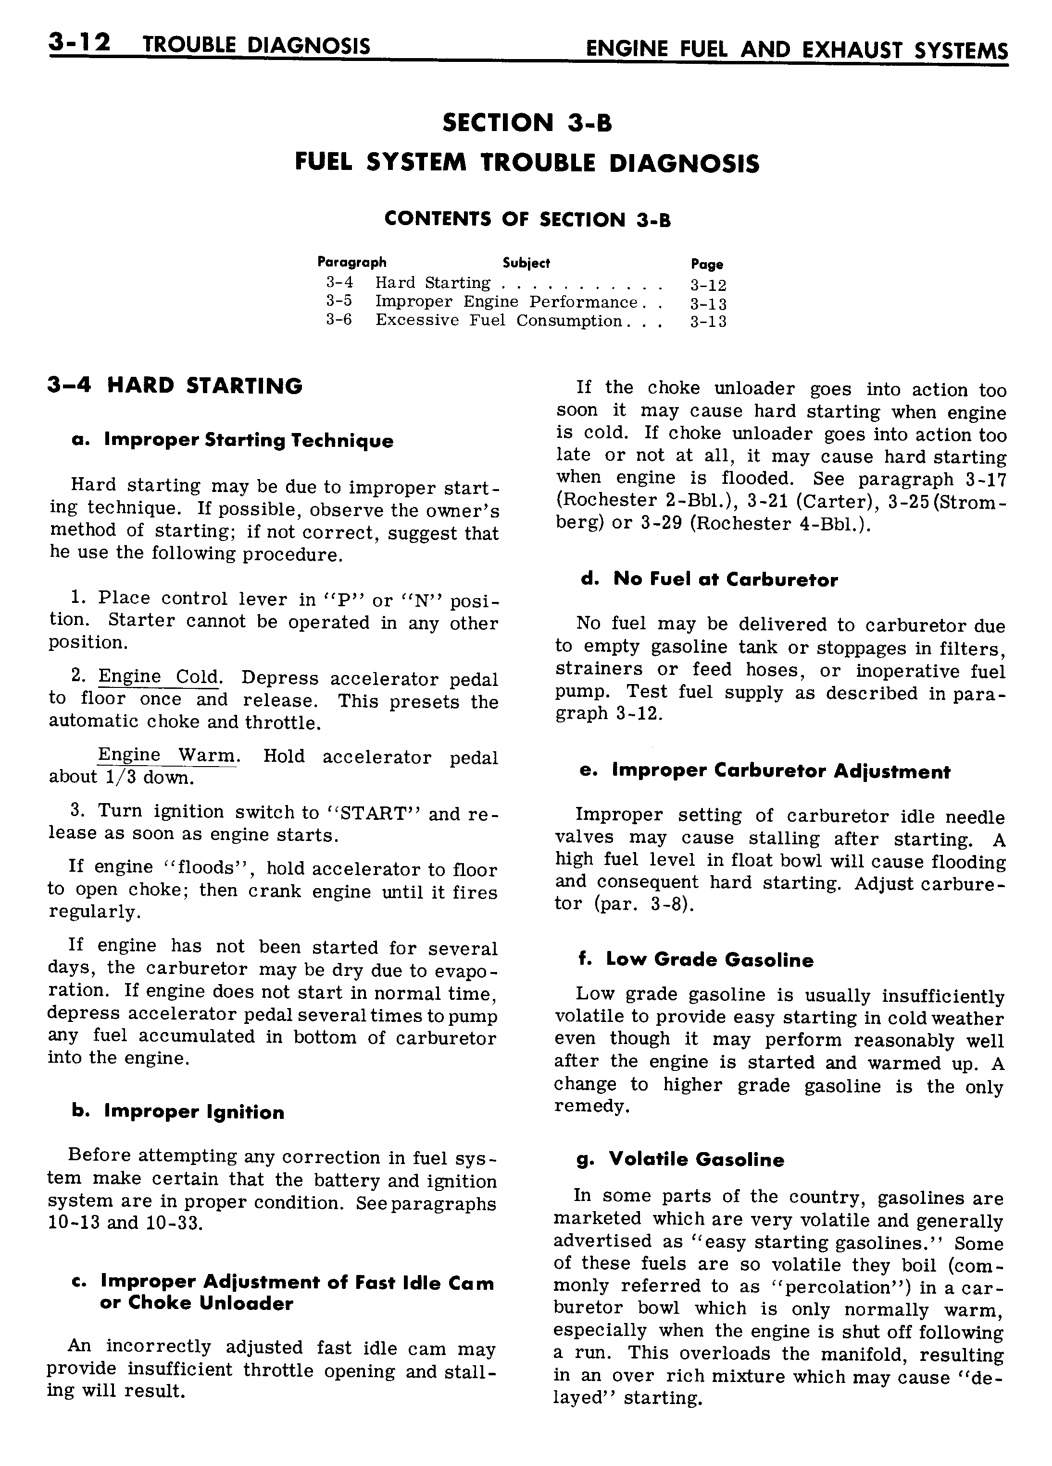 n_04 1961 Buick Shop Manual - Engine Fuel & Exhaust-012-012.jpg